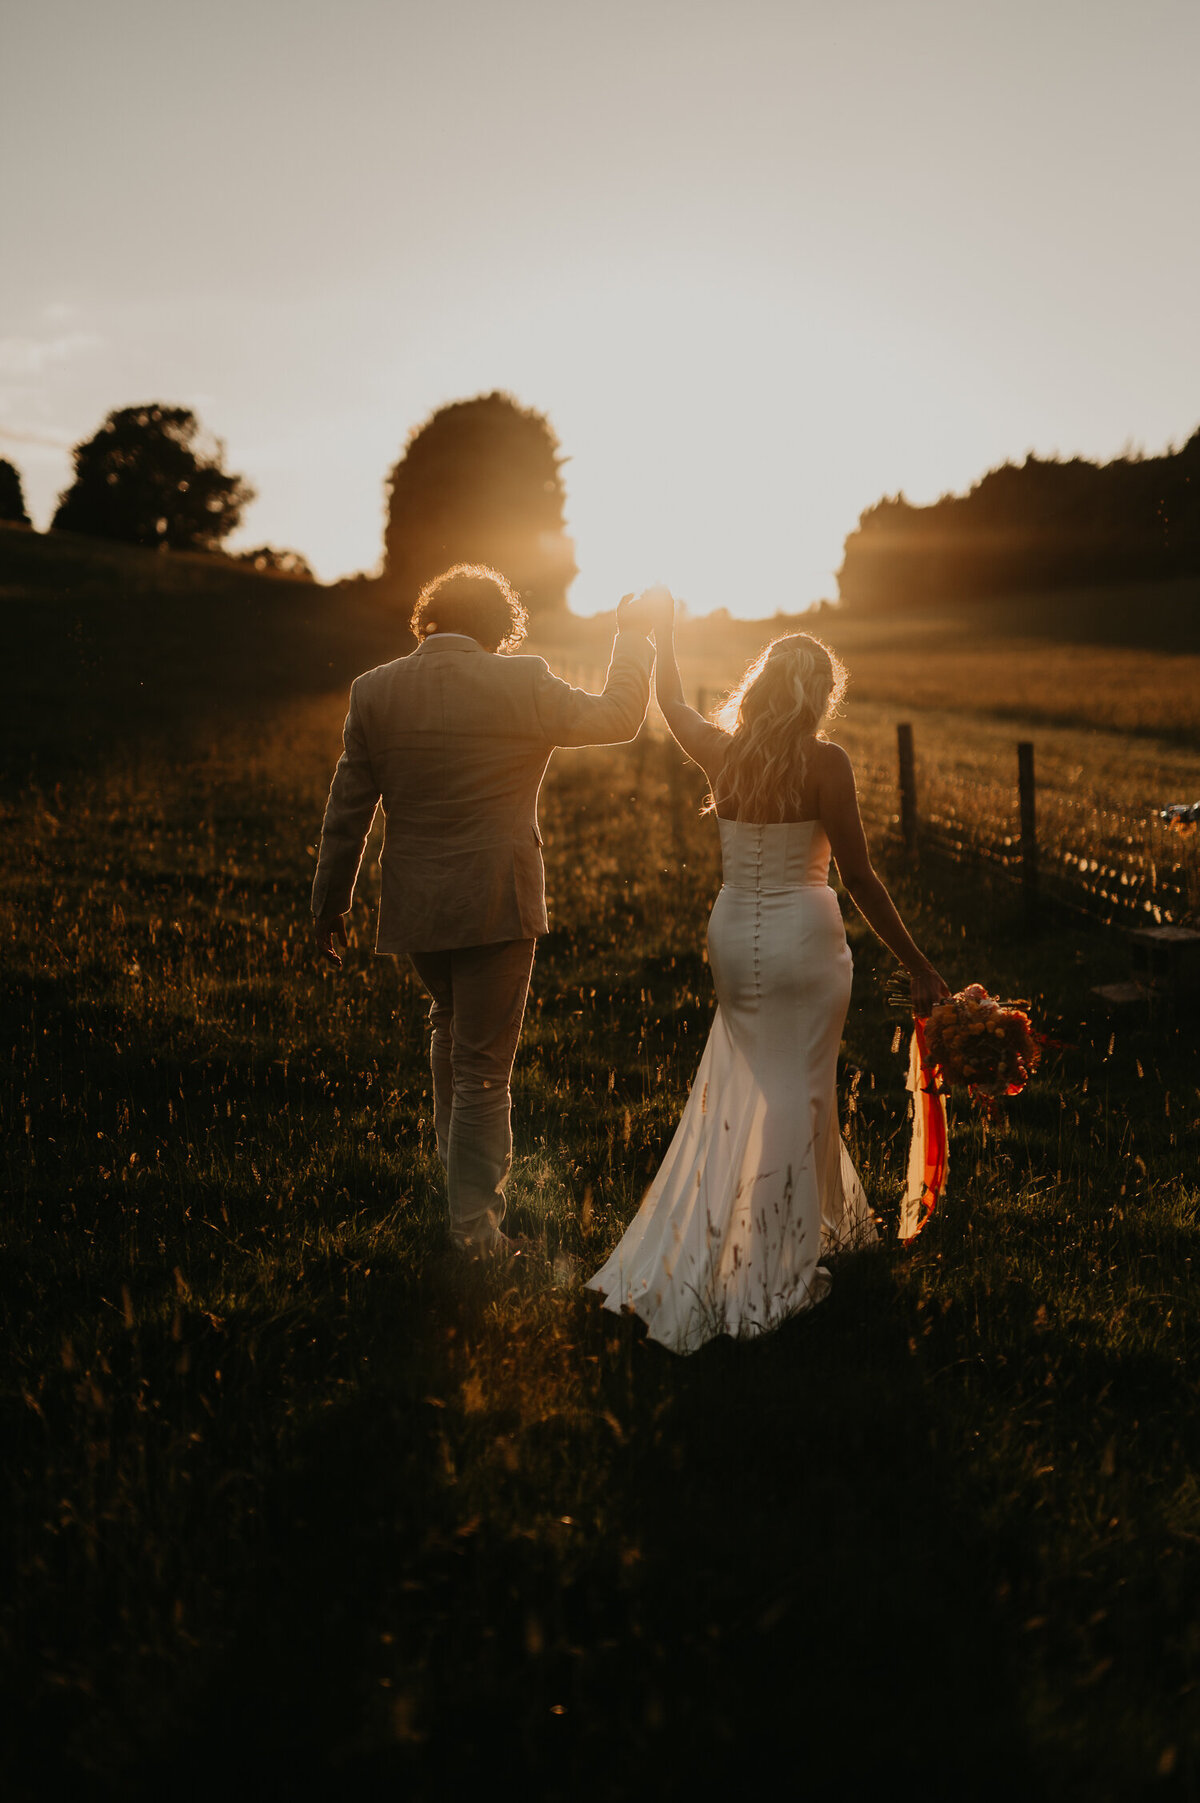 Bride and groom walk in a field during sunset at Hadsham Farm wedding venue in Banbury.